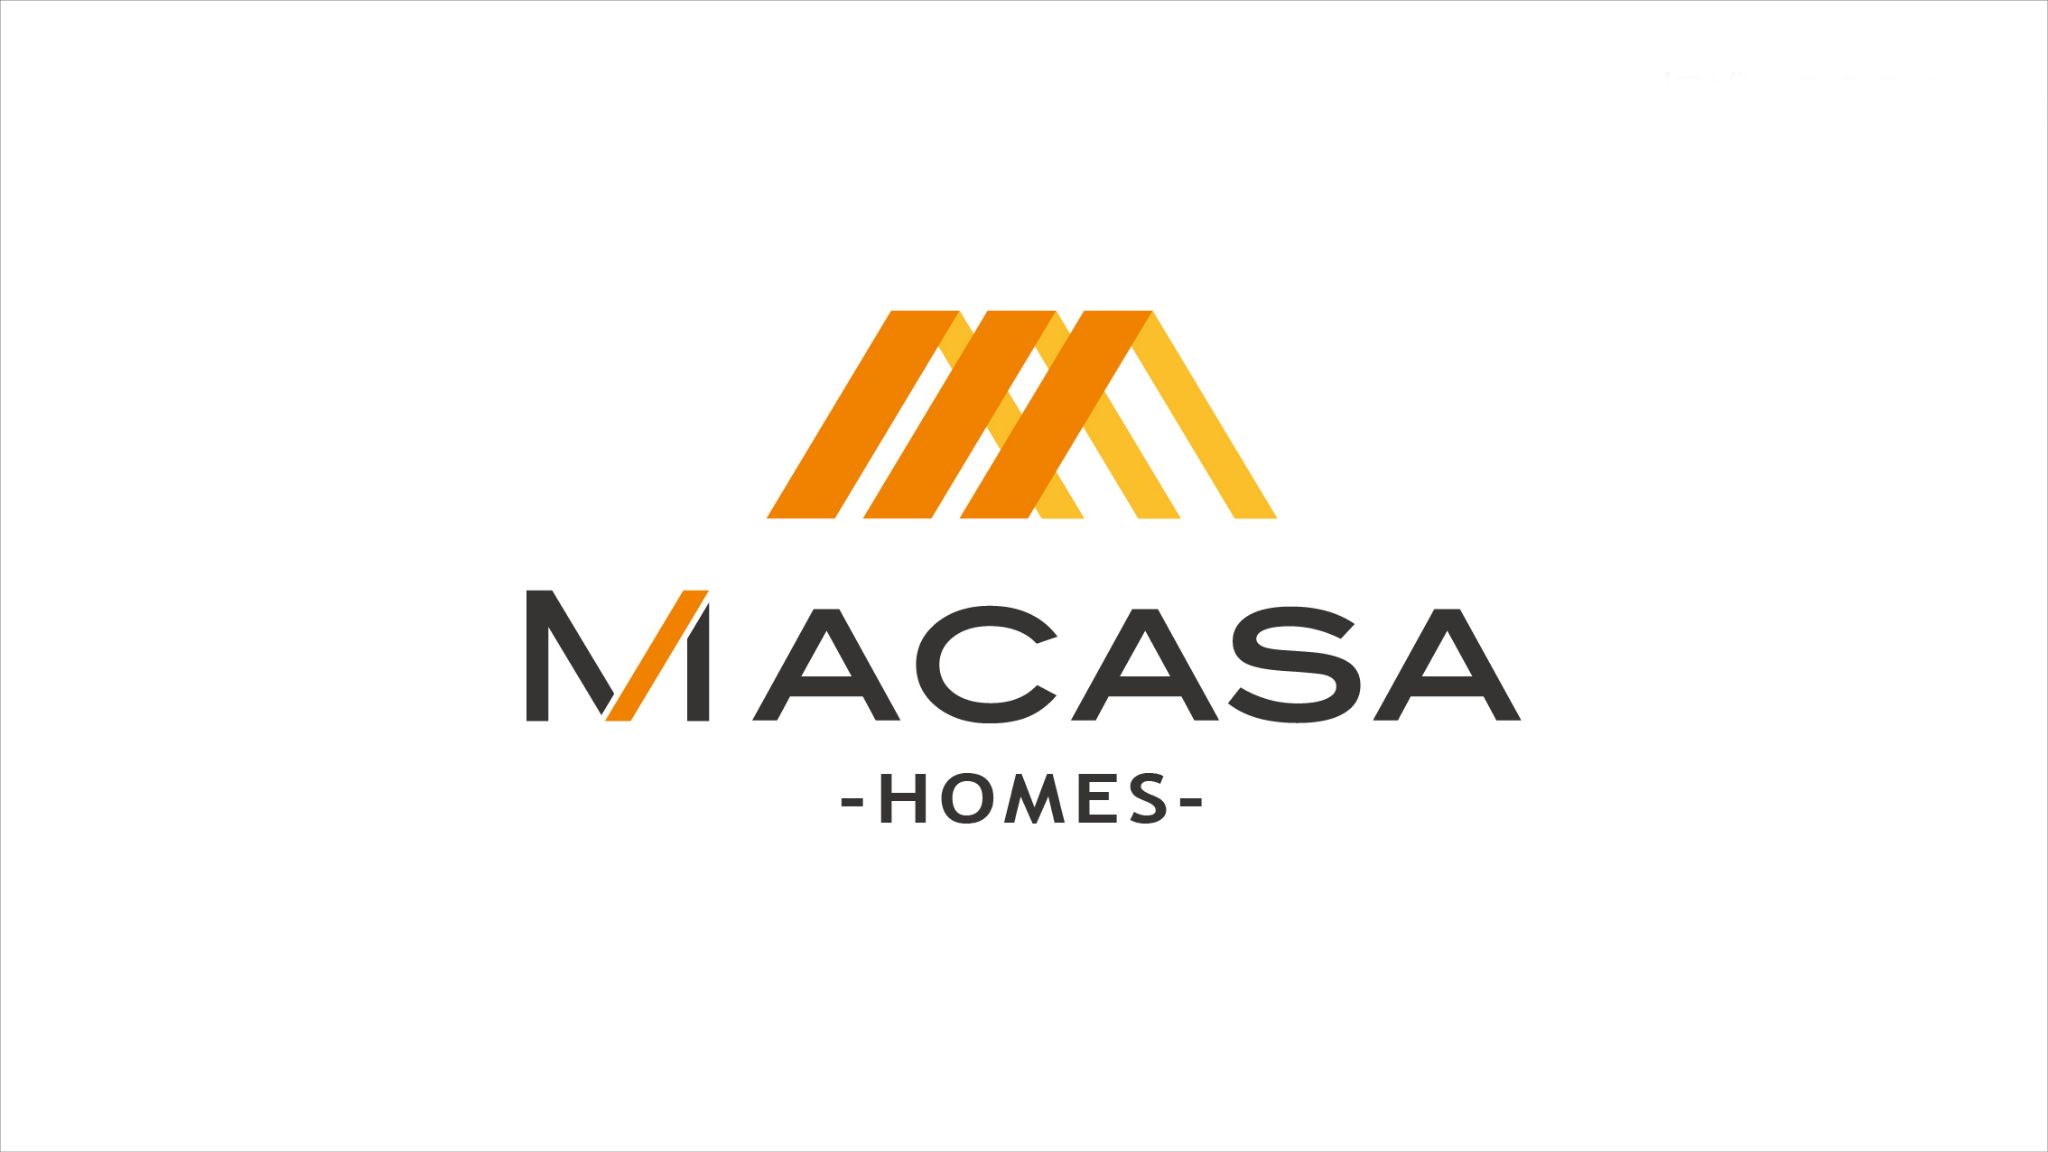 MACASA Homes